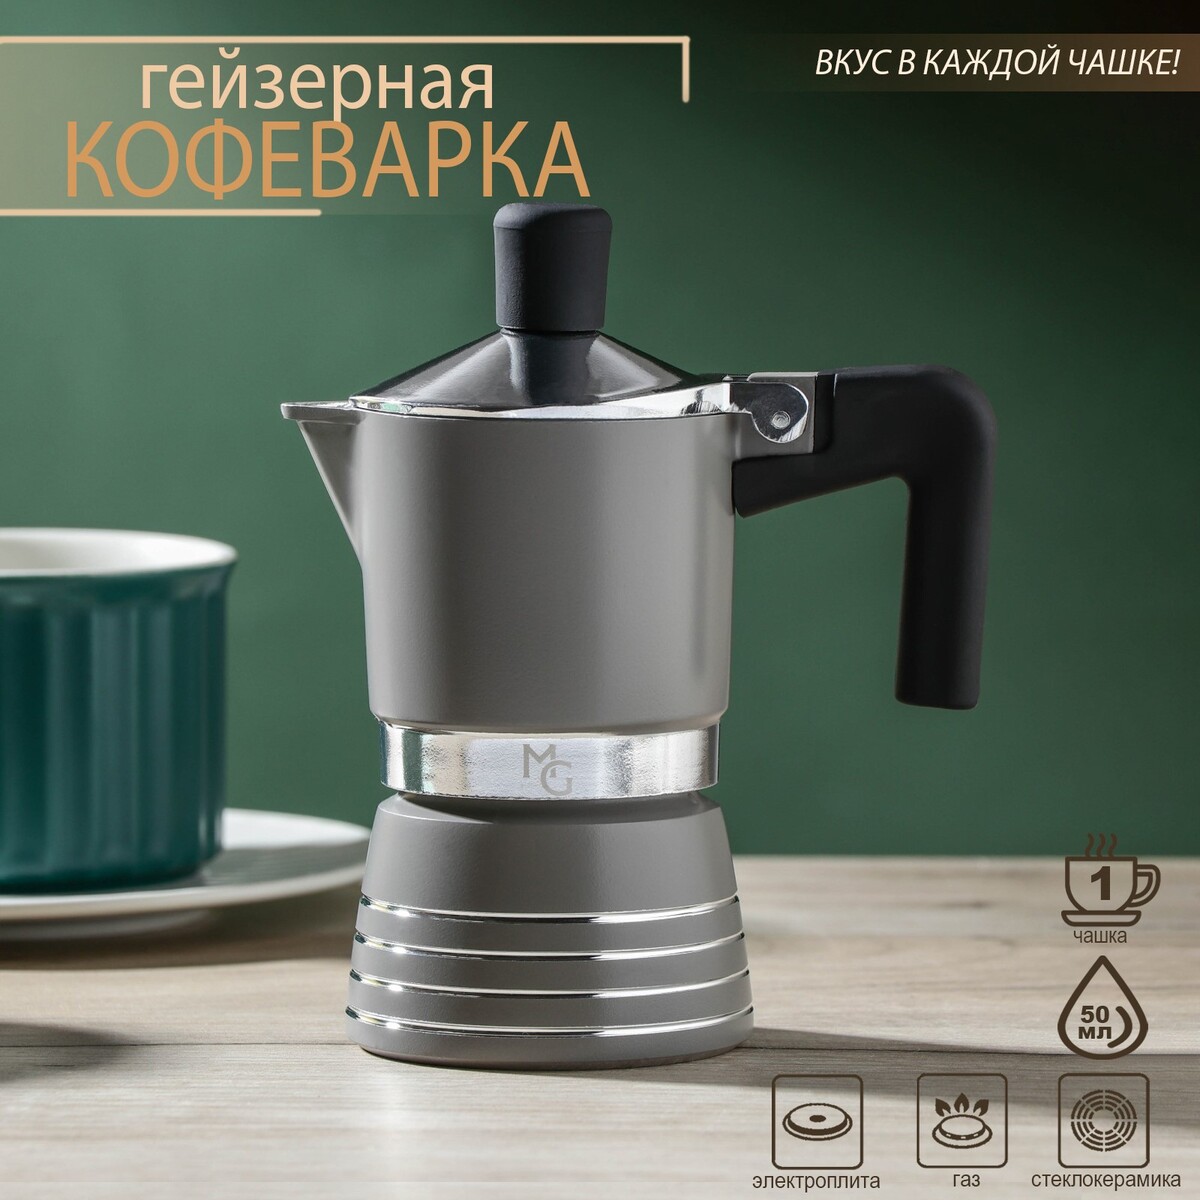 Кофеварка гейзерная magistro moka, на 1 чашку, 50 мл кофеварка рожковая scarlett sc cm33017